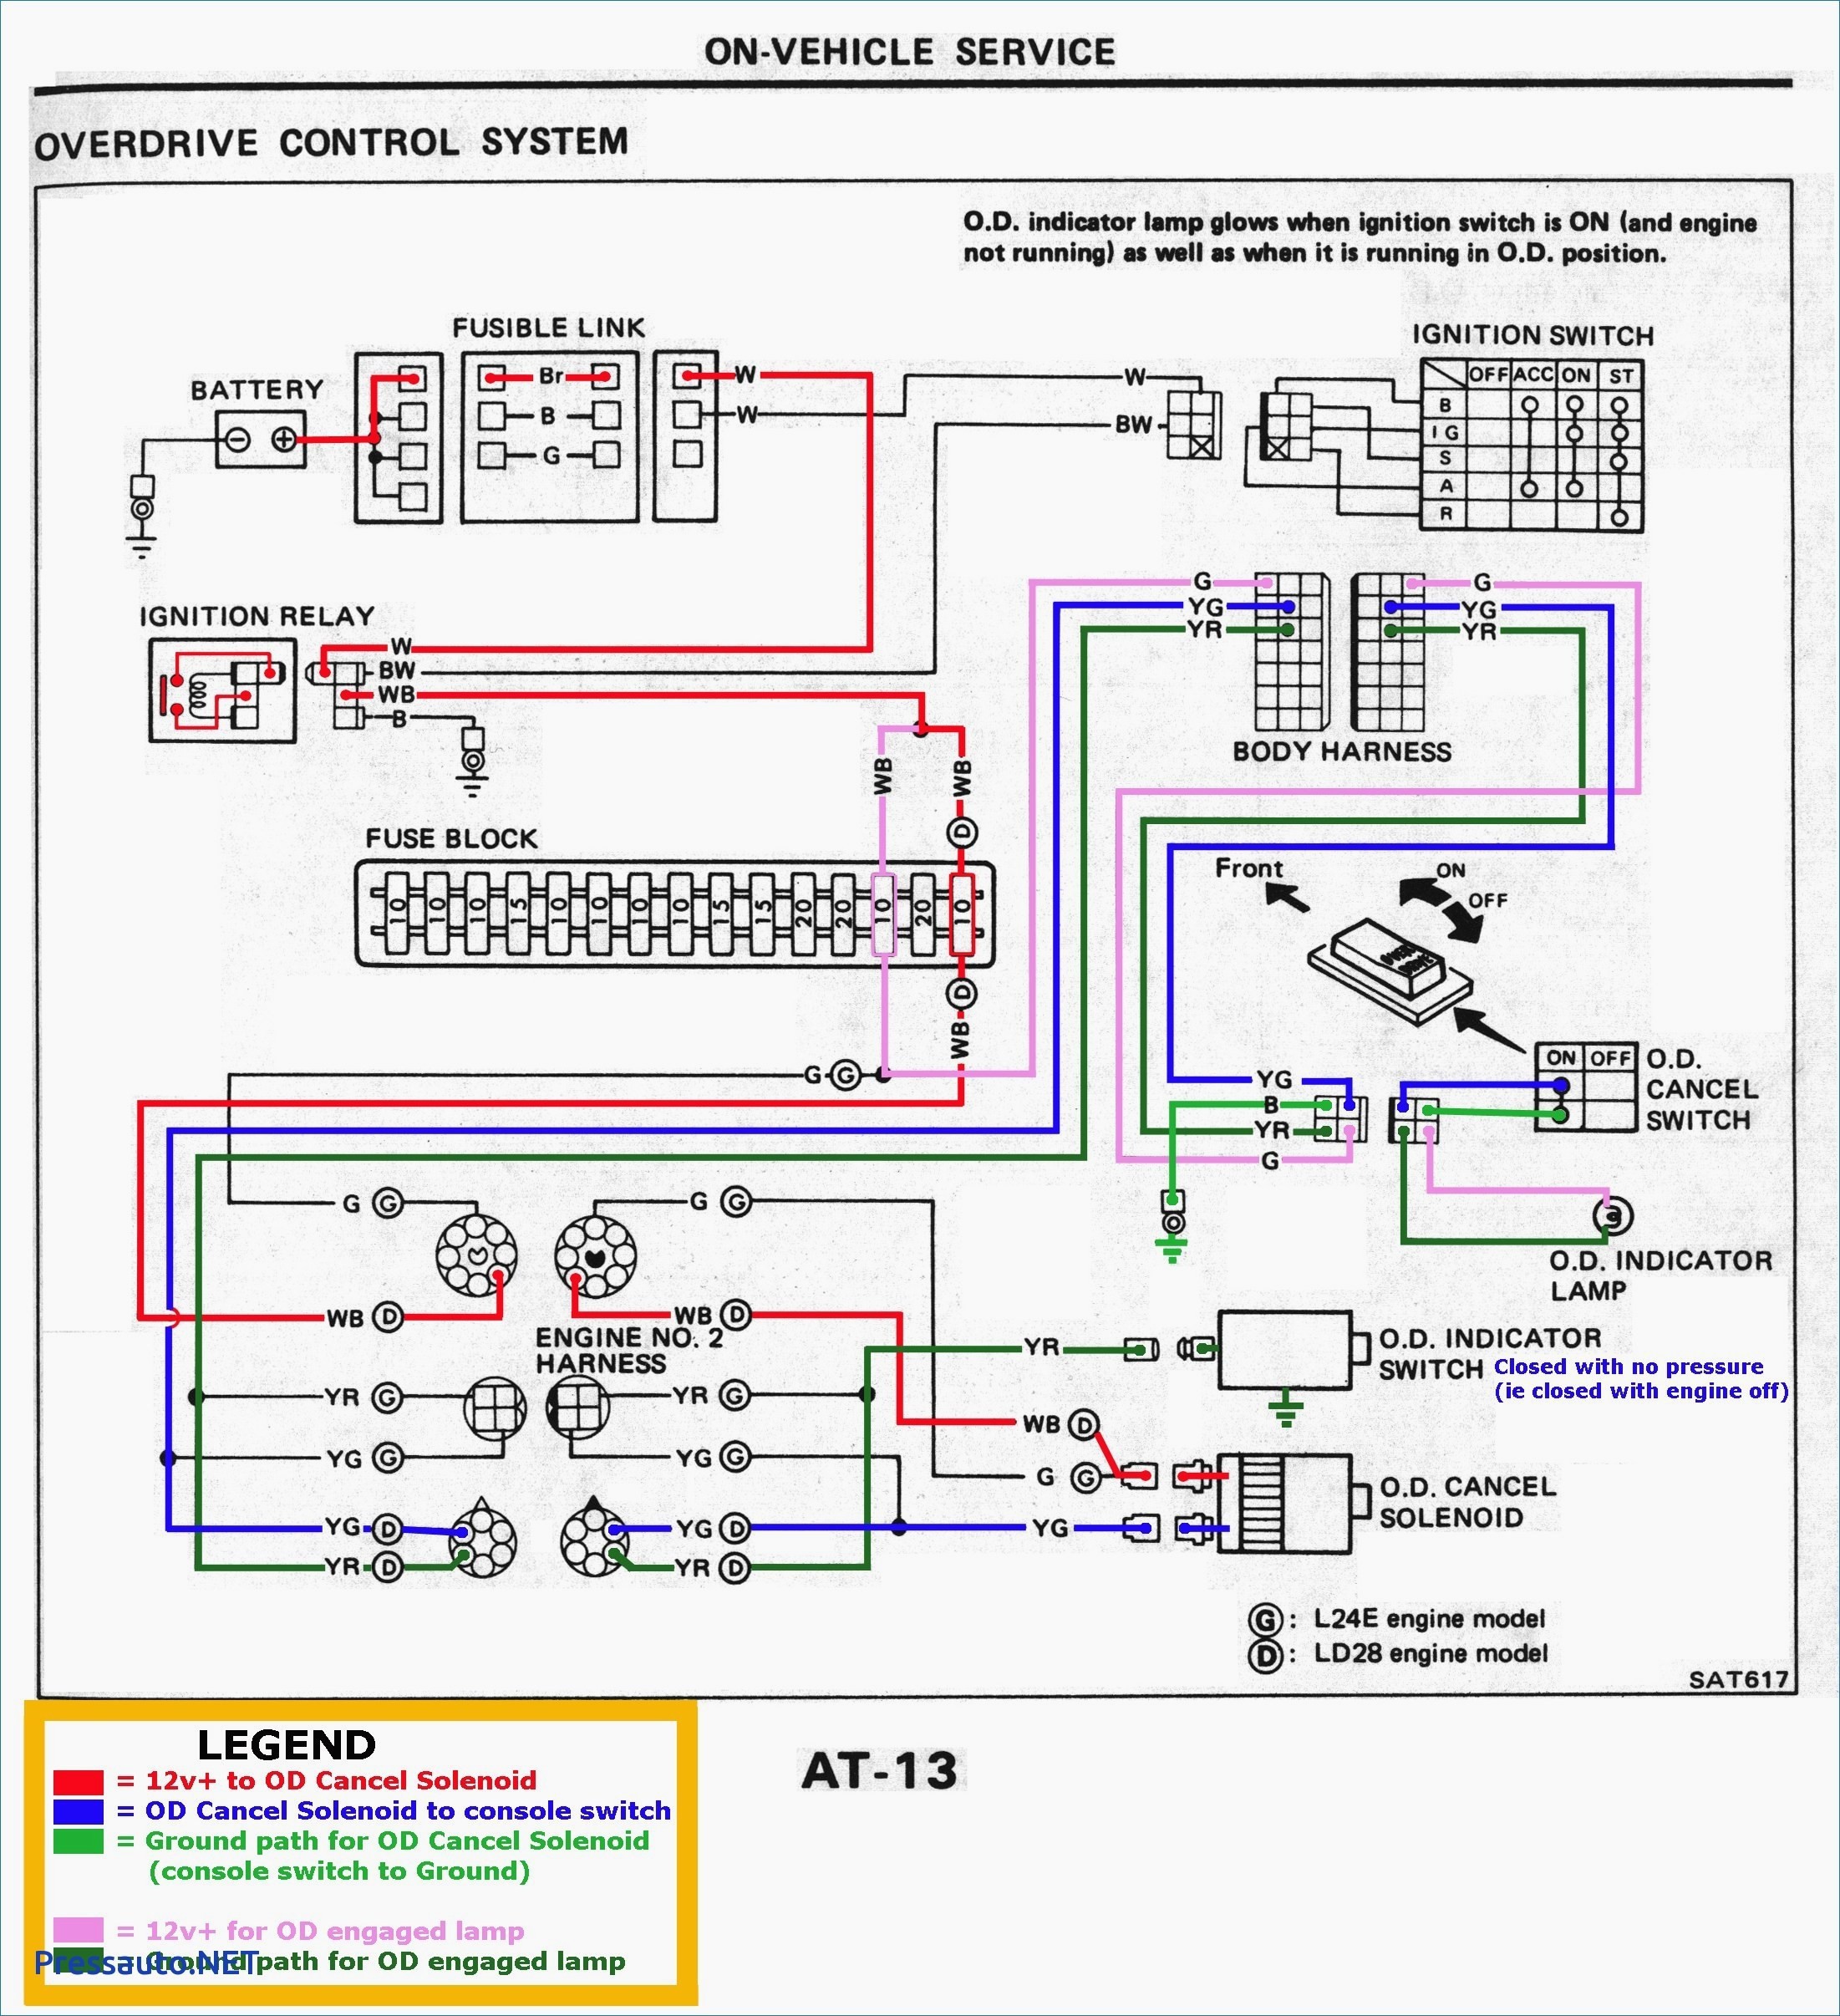 2000 Nissan Frontier Parts Diagram 2000 Nissan Frontier Body Diagram Wiring Diagram Services • Of 2000 Nissan Frontier Parts Diagram